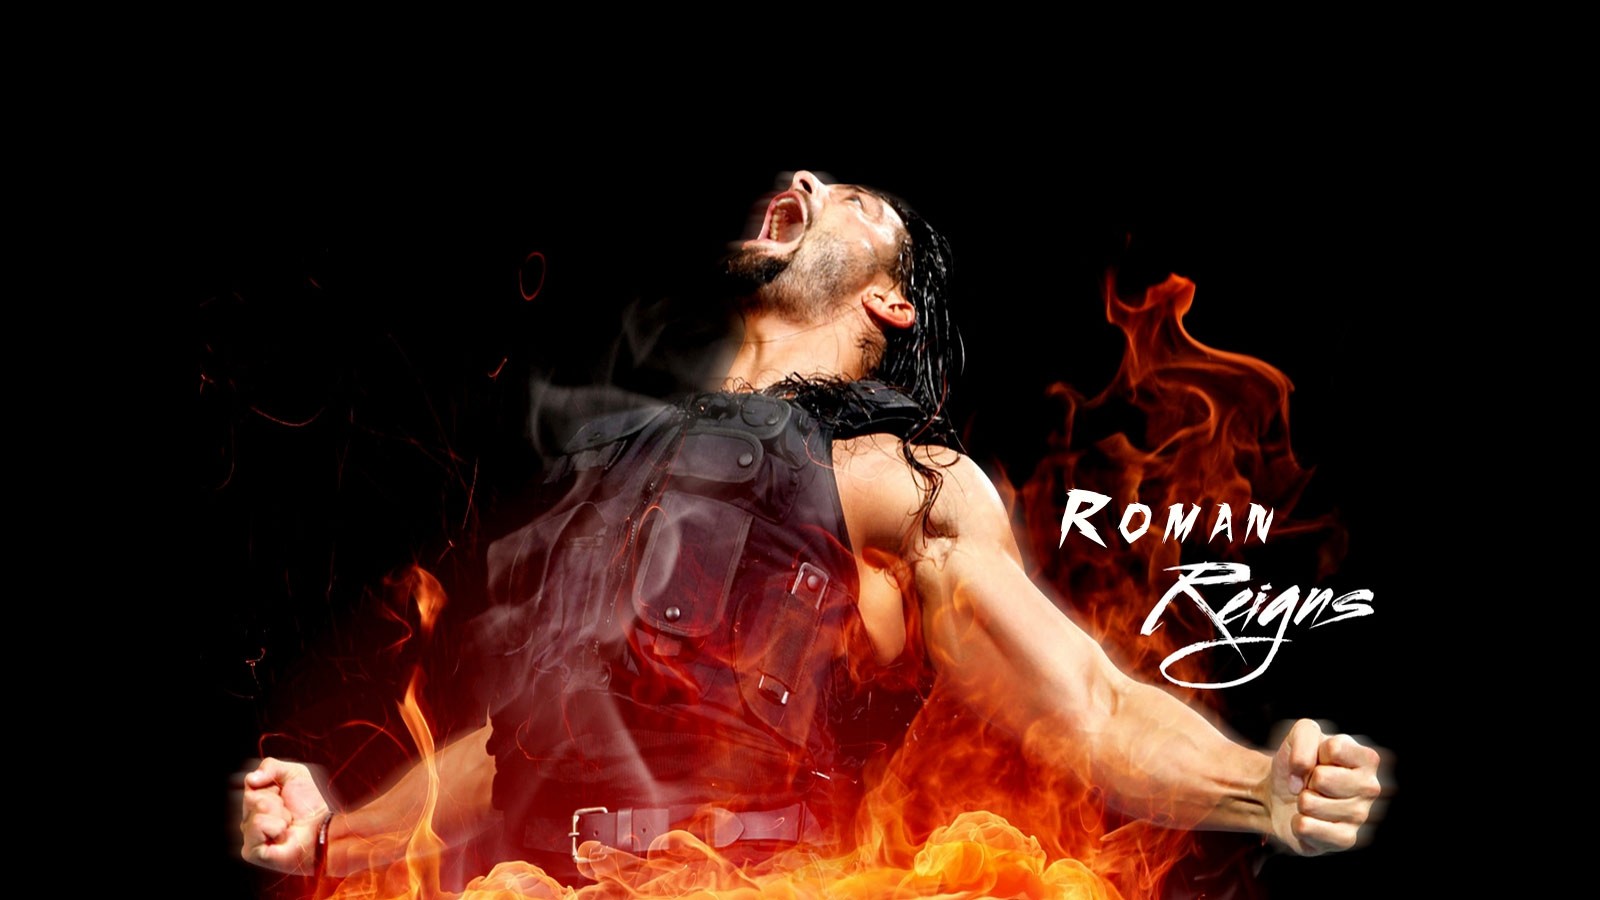 Roman Reigns On Fire Wwe HD Wallpaper Search More Wrestling